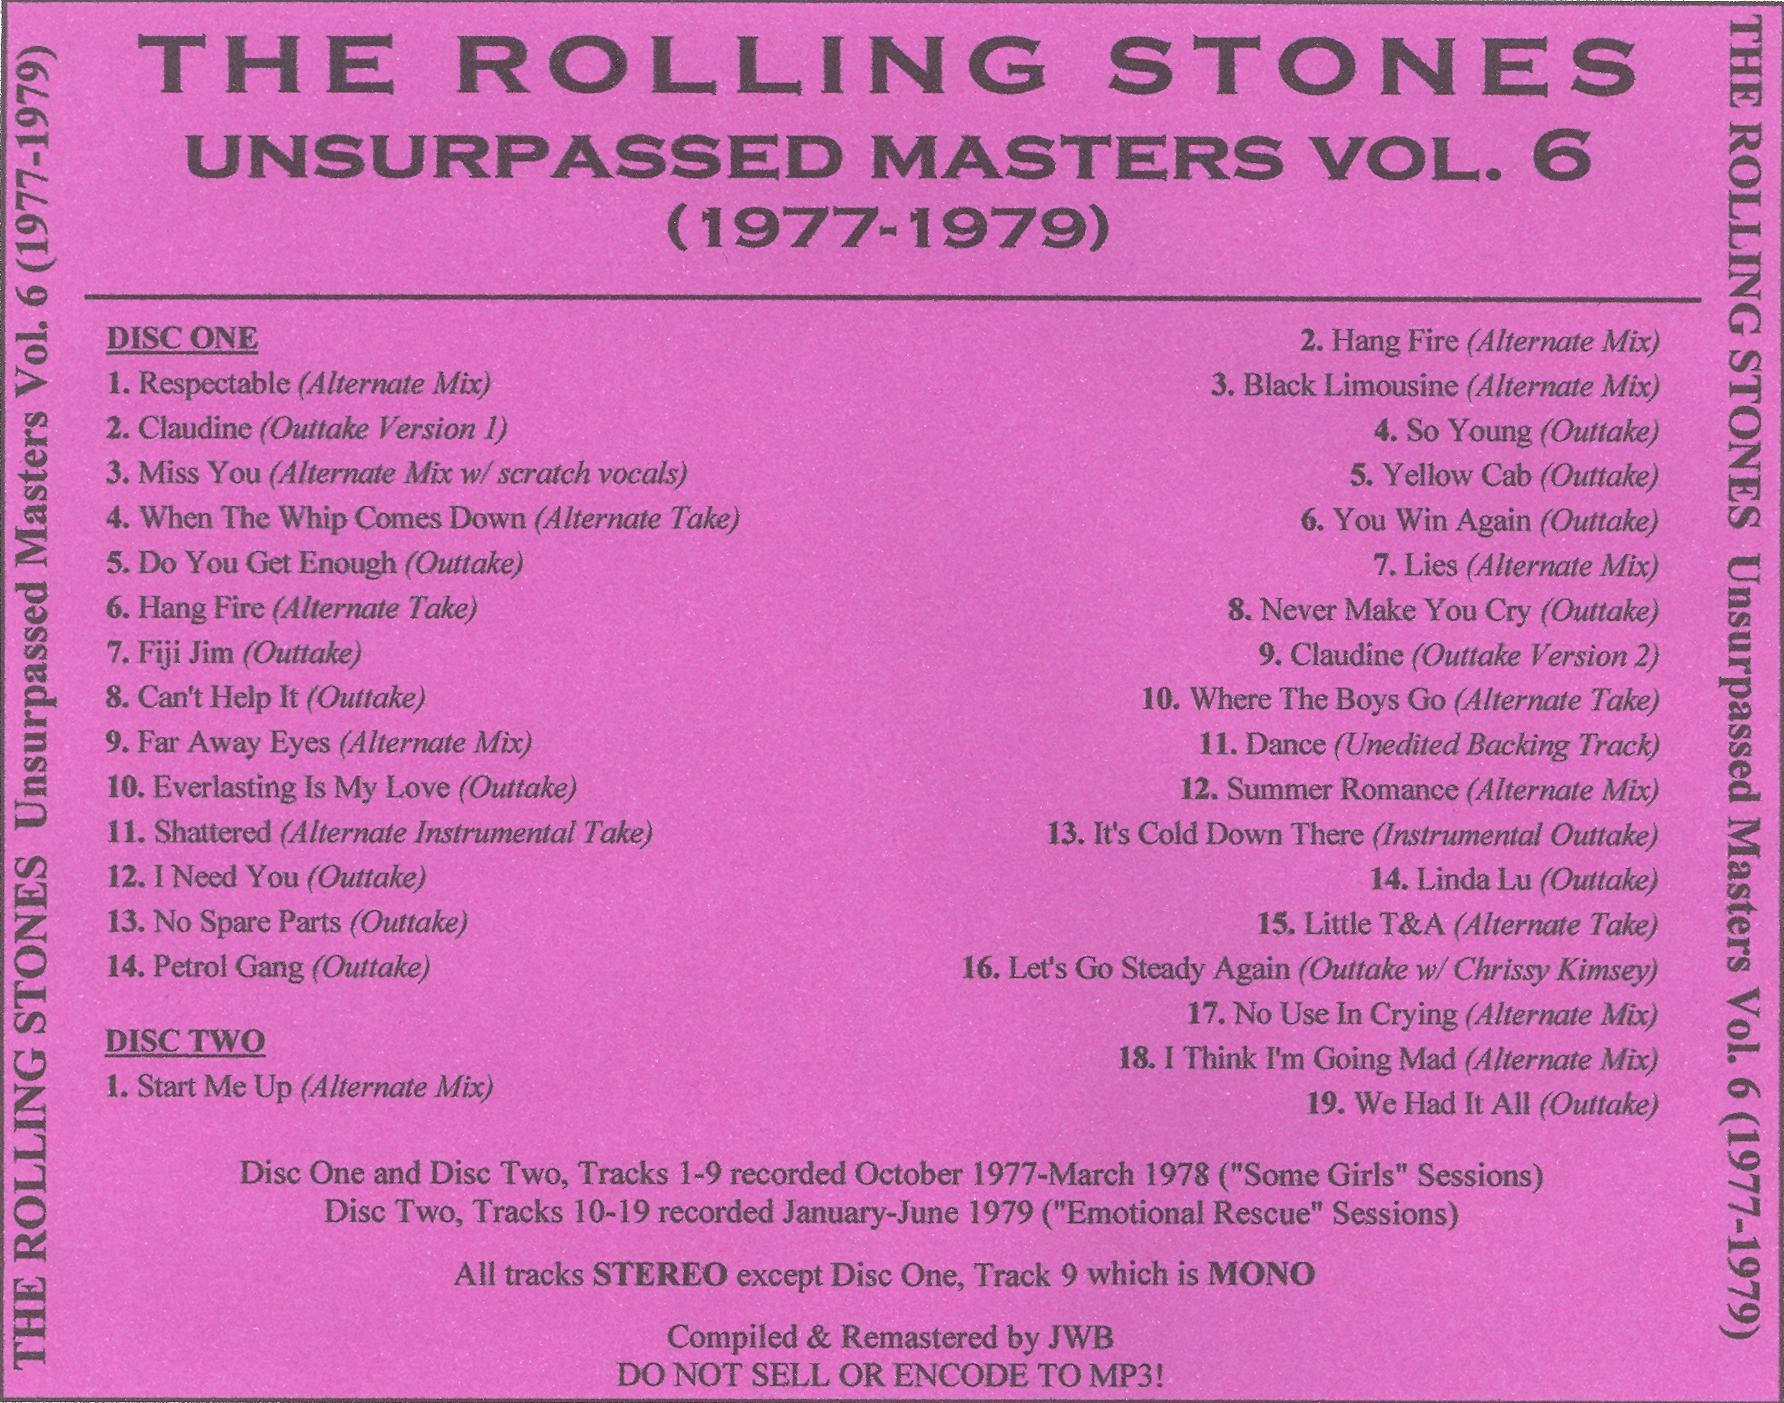 RollingStones1977-1979UnsurpassedMastersVol6 (2).jpg